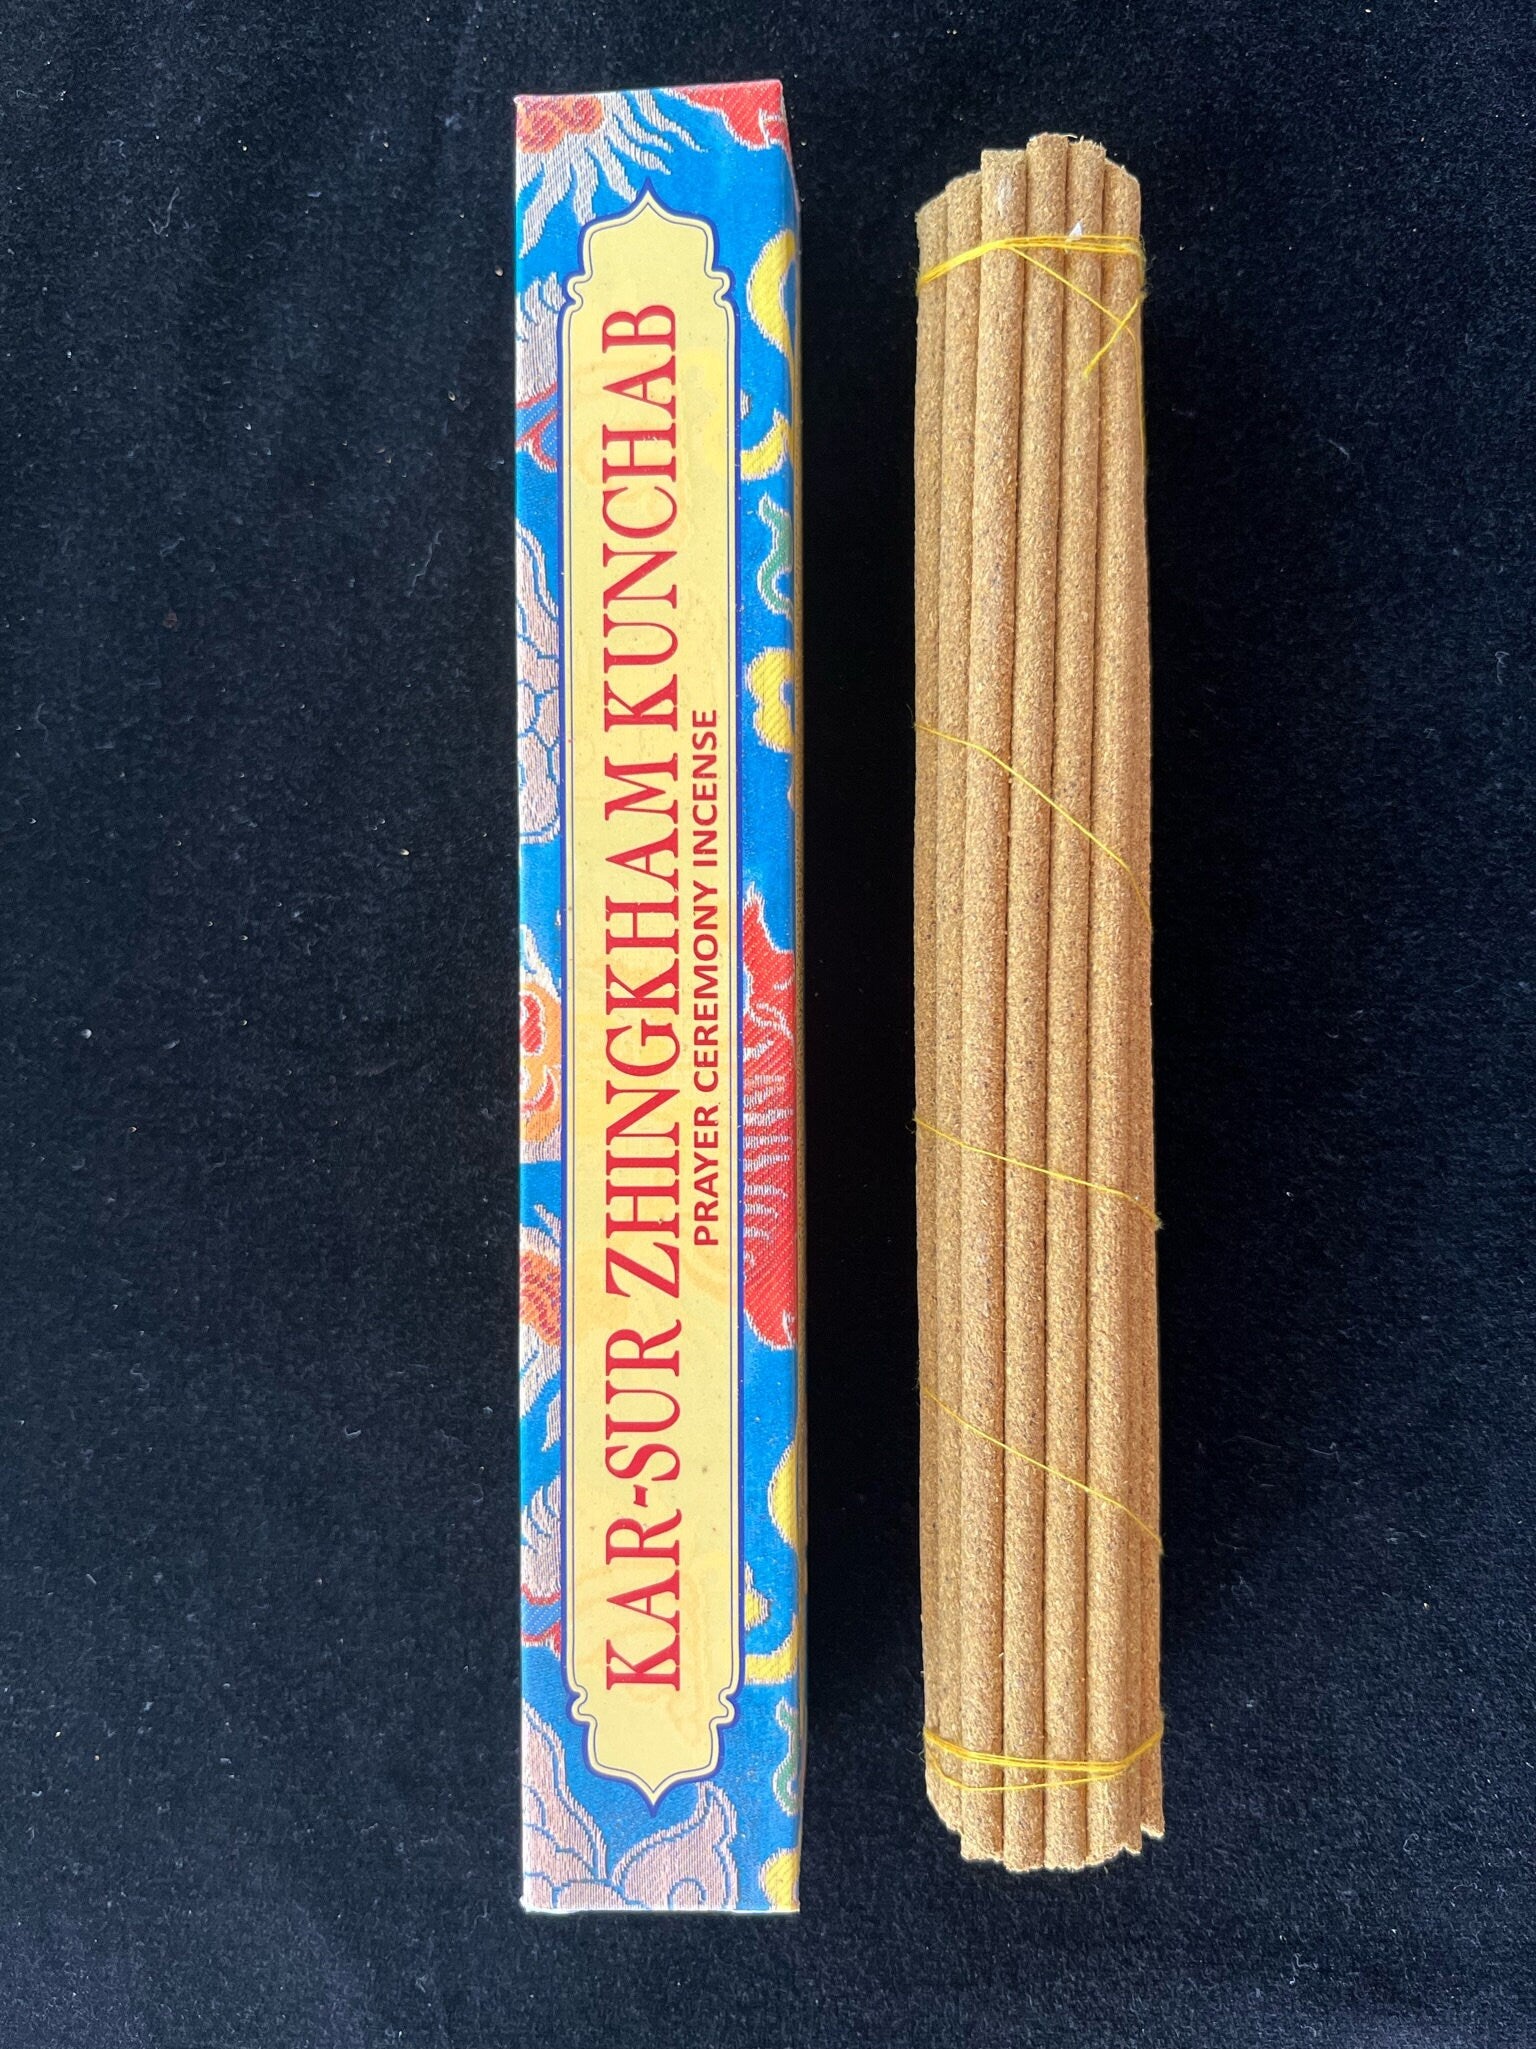 Kar-Sur Zhingkham Kunchab Prayer Ceremony Incense | Dhendup Pleasure Incense Incense  | Tibetan Incense | 30 sticks | 8 inch sticks